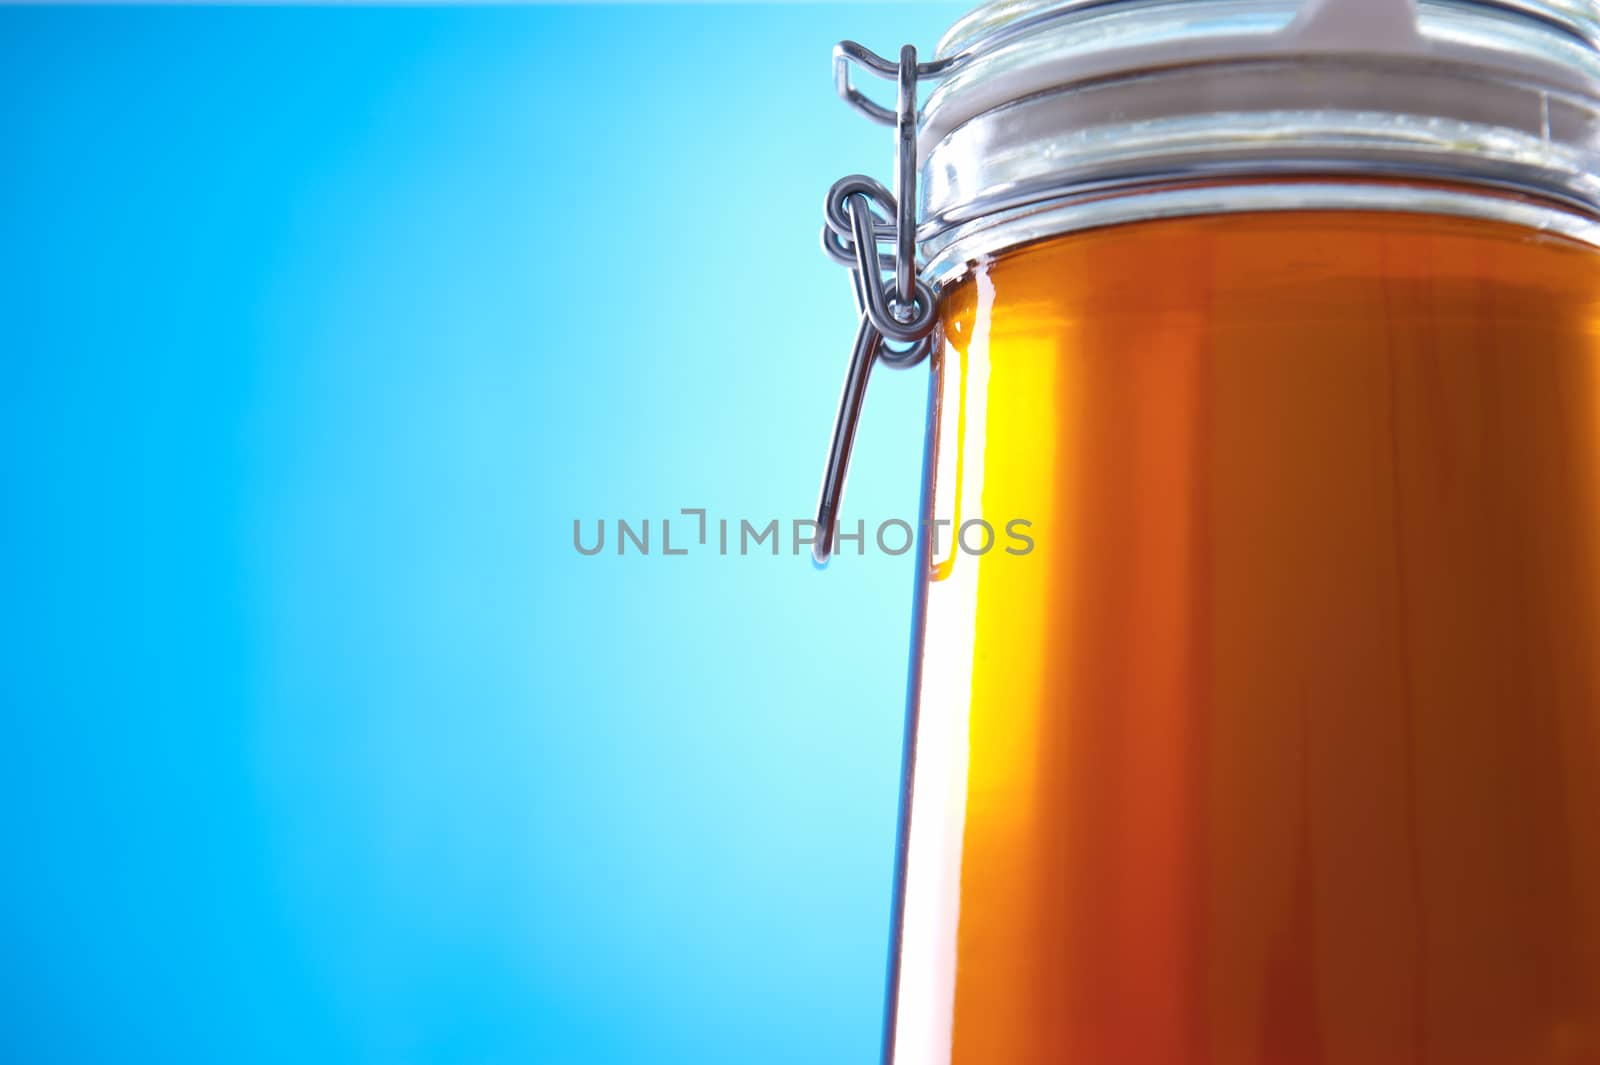 Polish jar of honey flower on a blue background